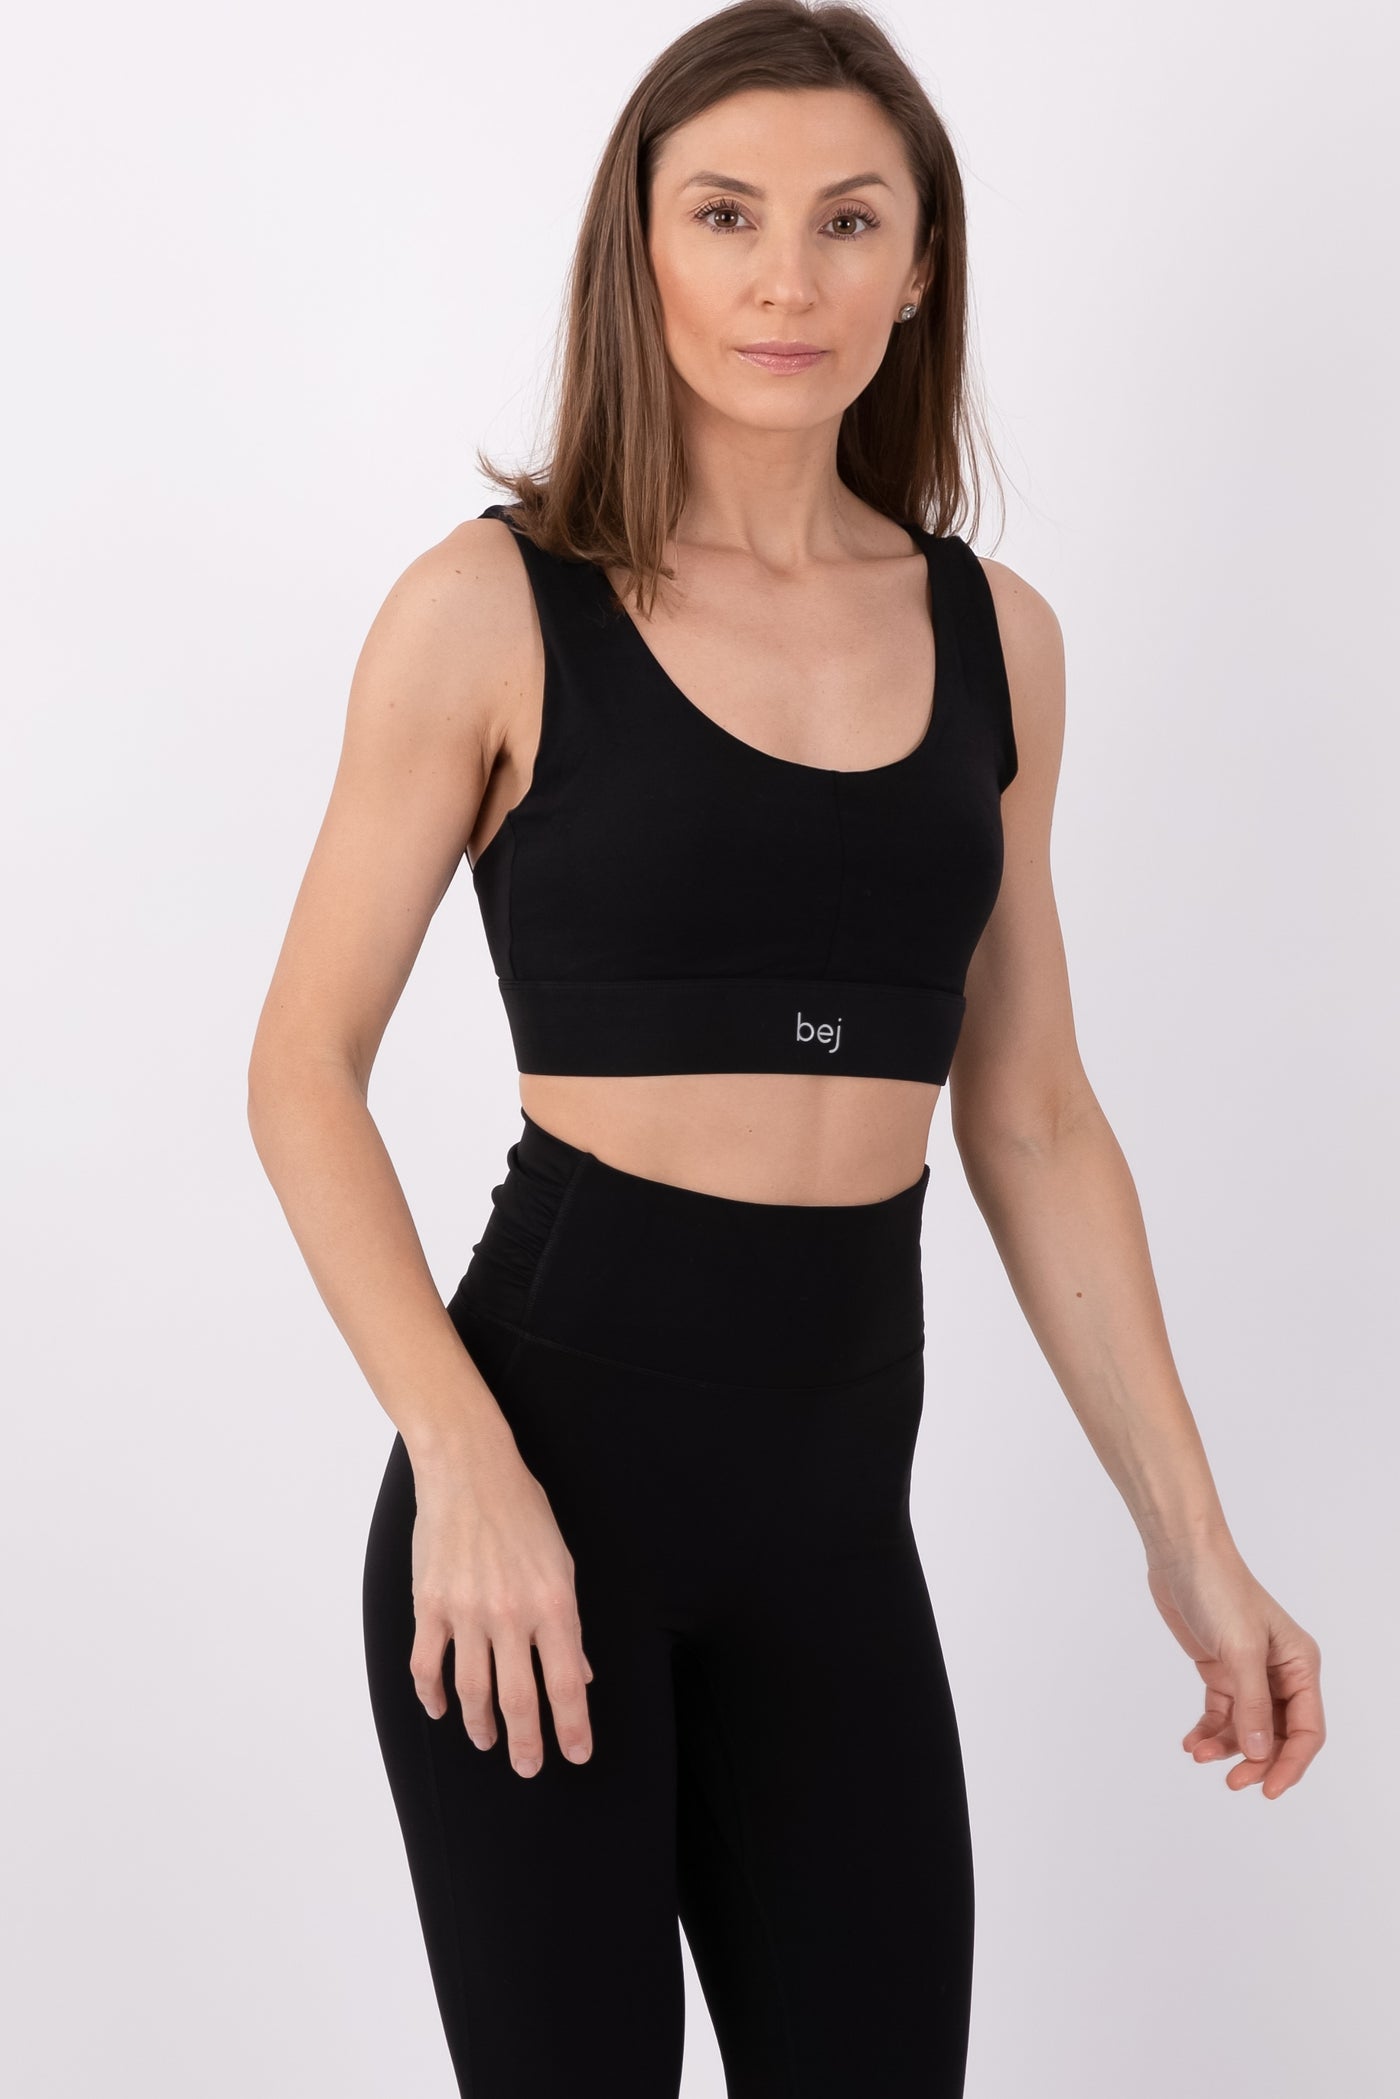 Athlete Black Legging - Shop women's workout apparel online | Leggings, hoodies, Top & bras | bejactive